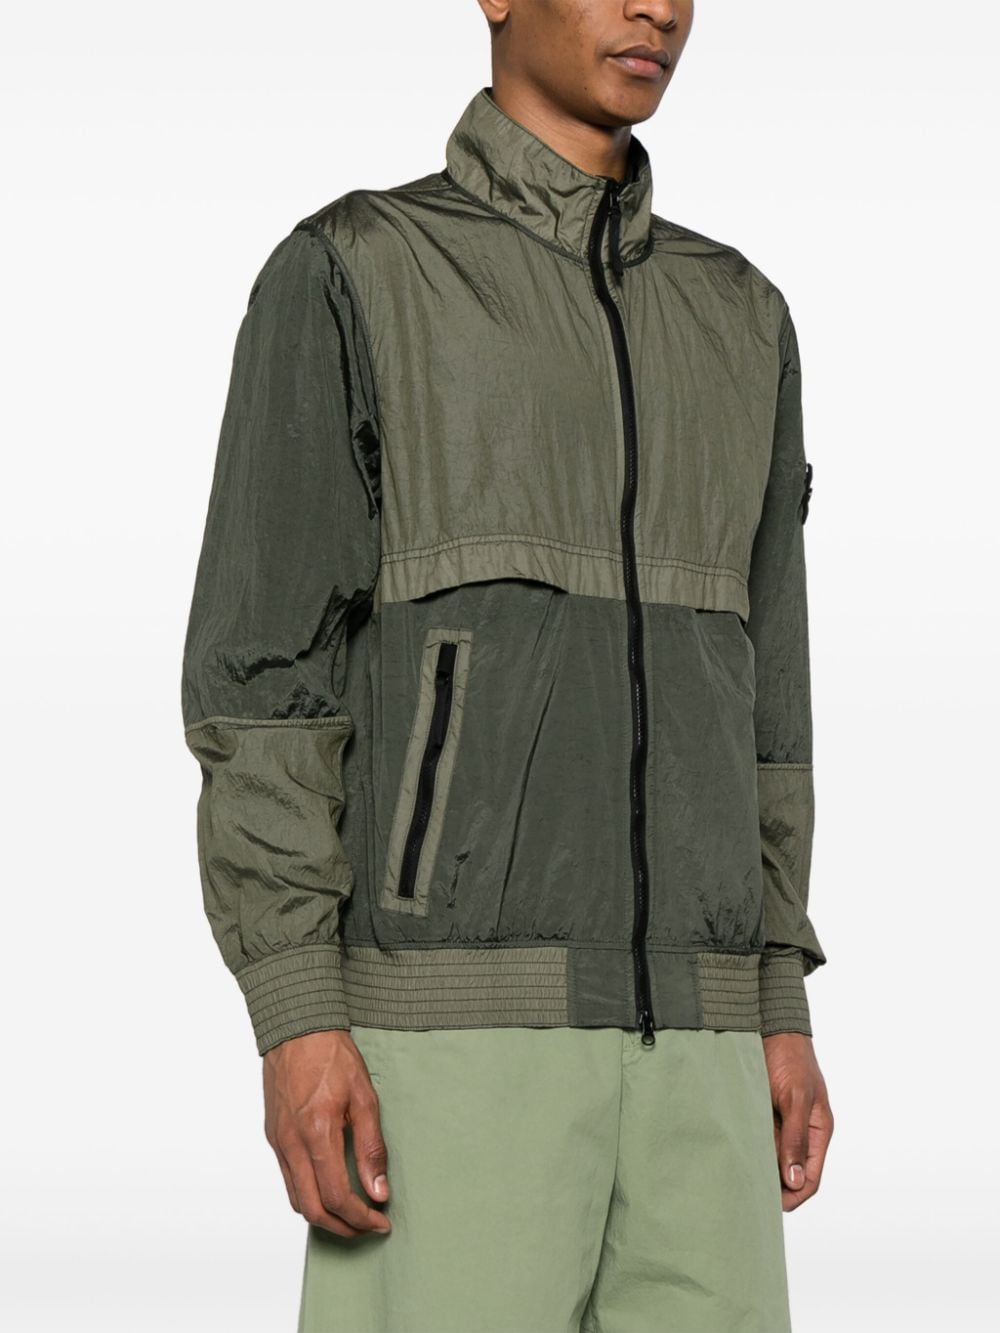 STONE ISLAND Dark Green Crinkled Blouson Jacket with Two-Tone Design for Men